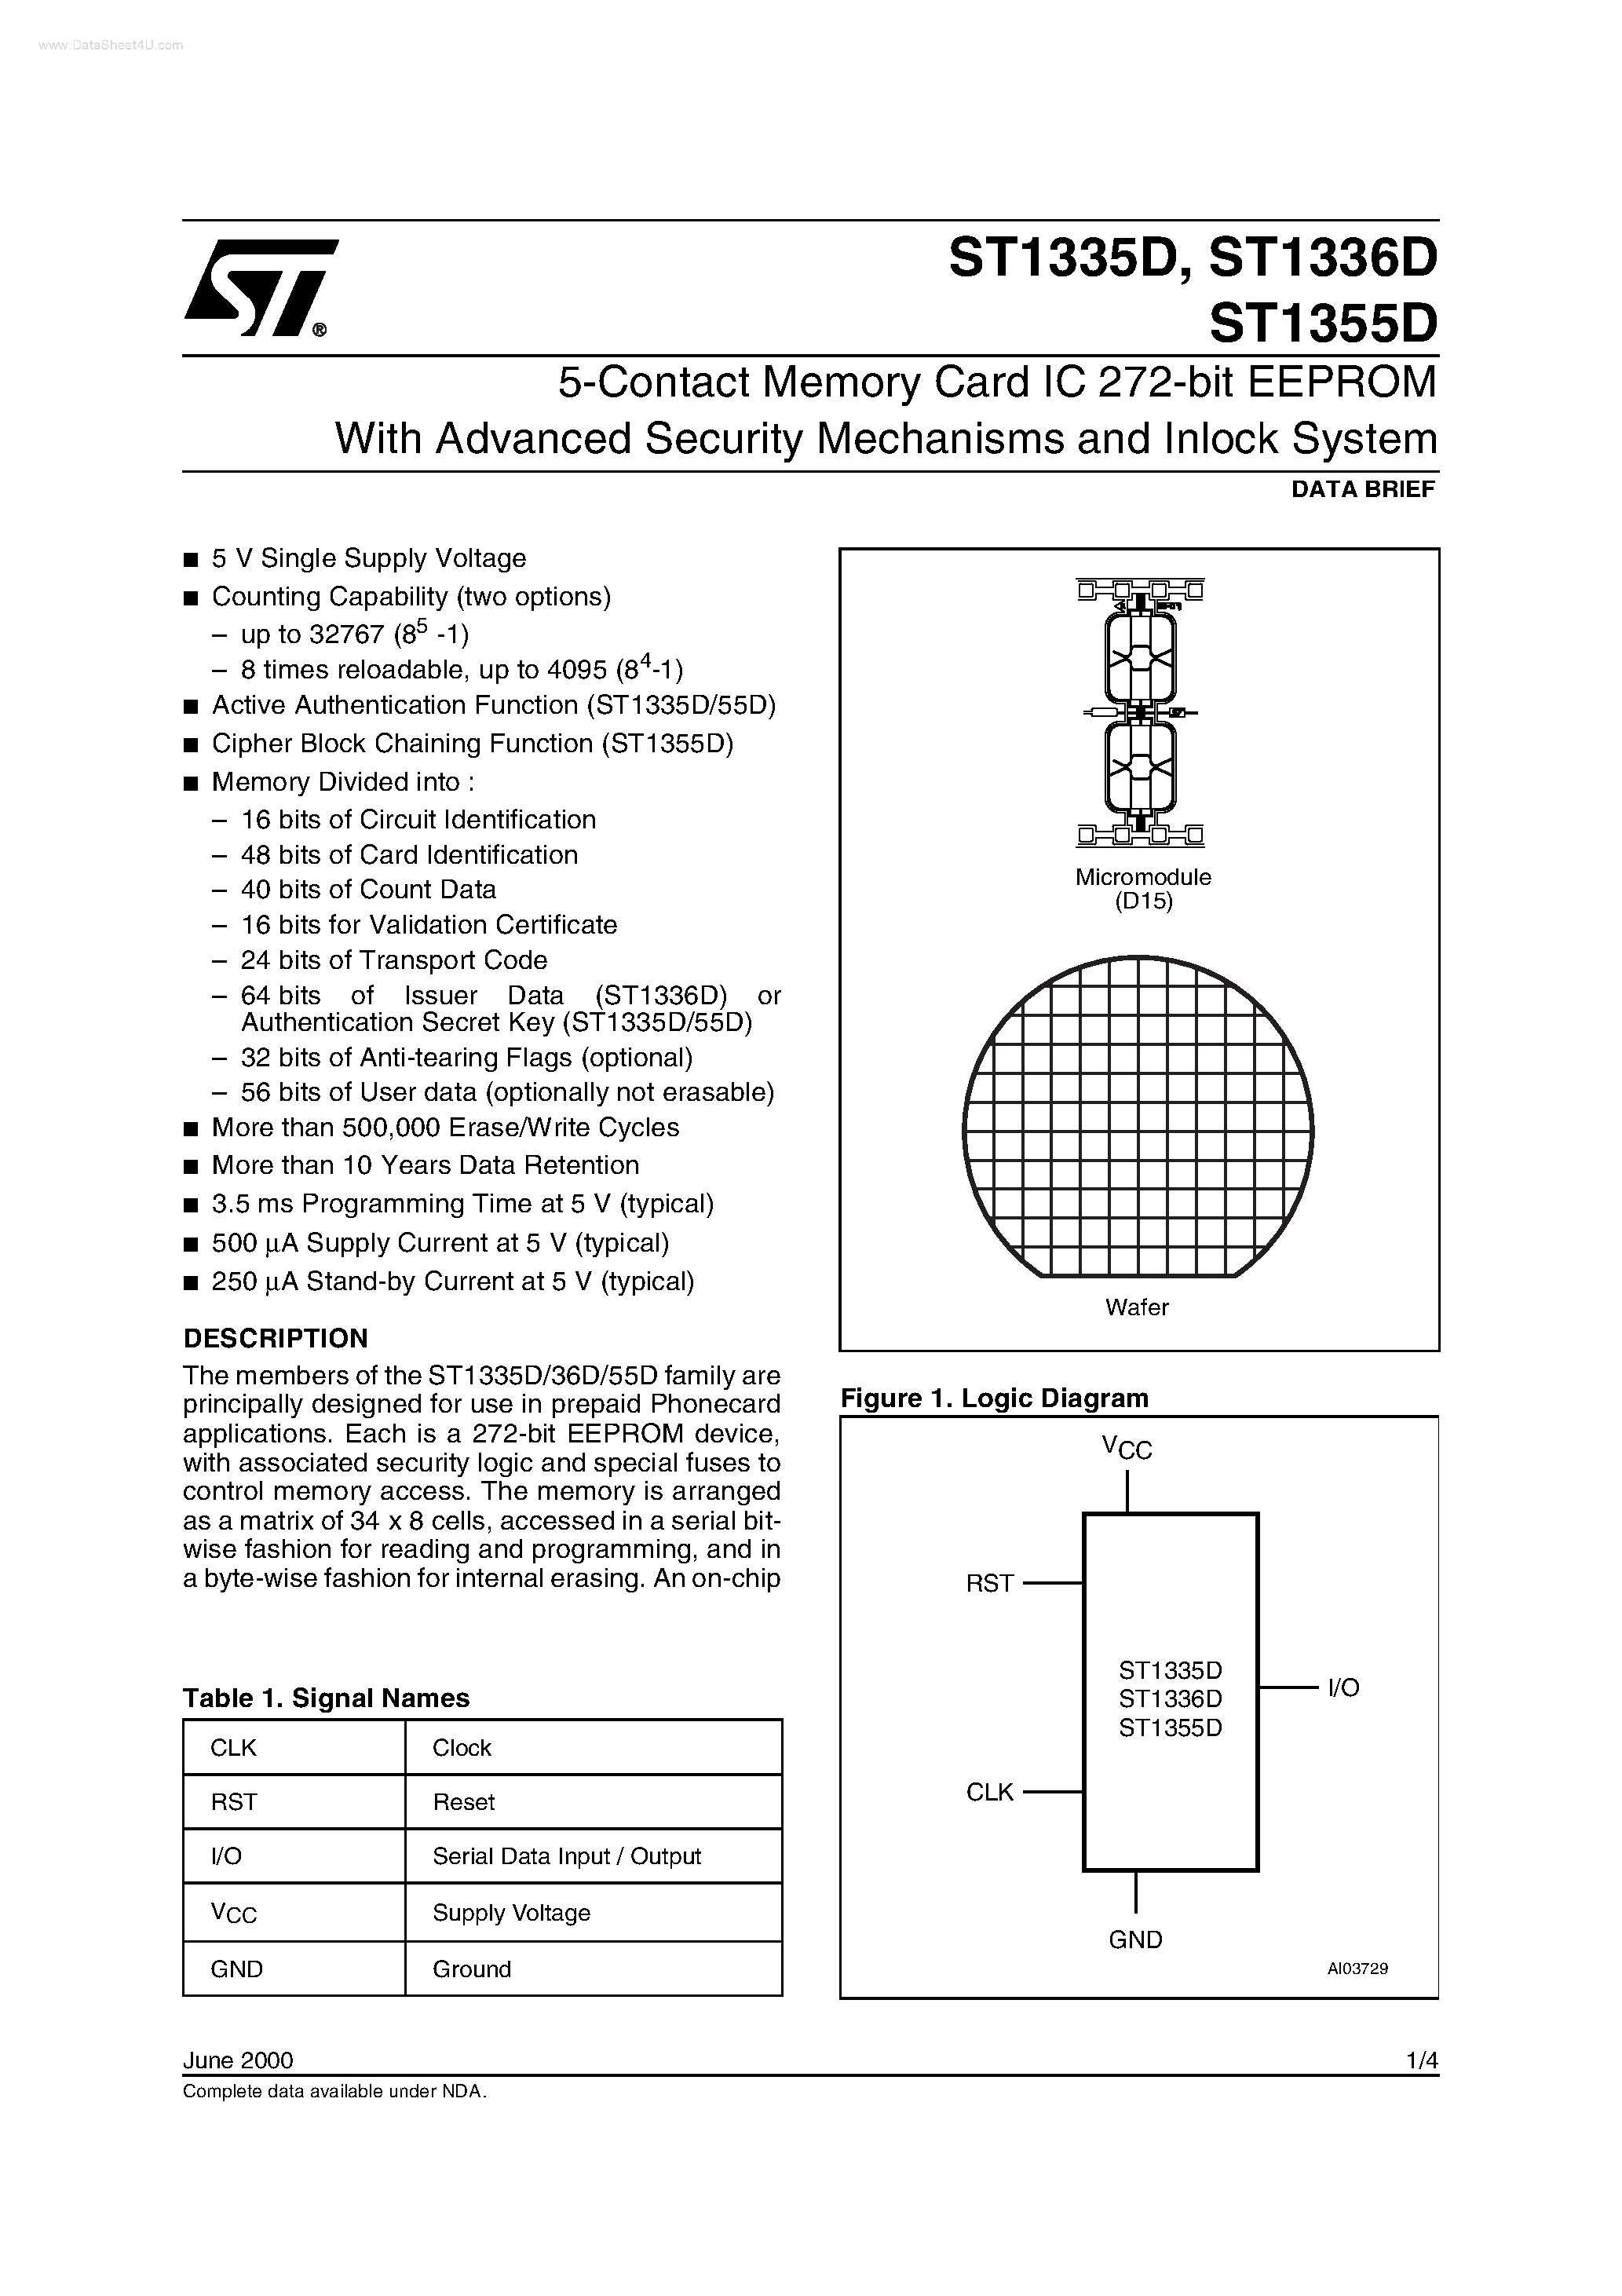 Datasheet ST1335D - (ST1335D / ST1336D / ST1355D) 5-Contact Memory Card IC 272-bit EEPROM page 1